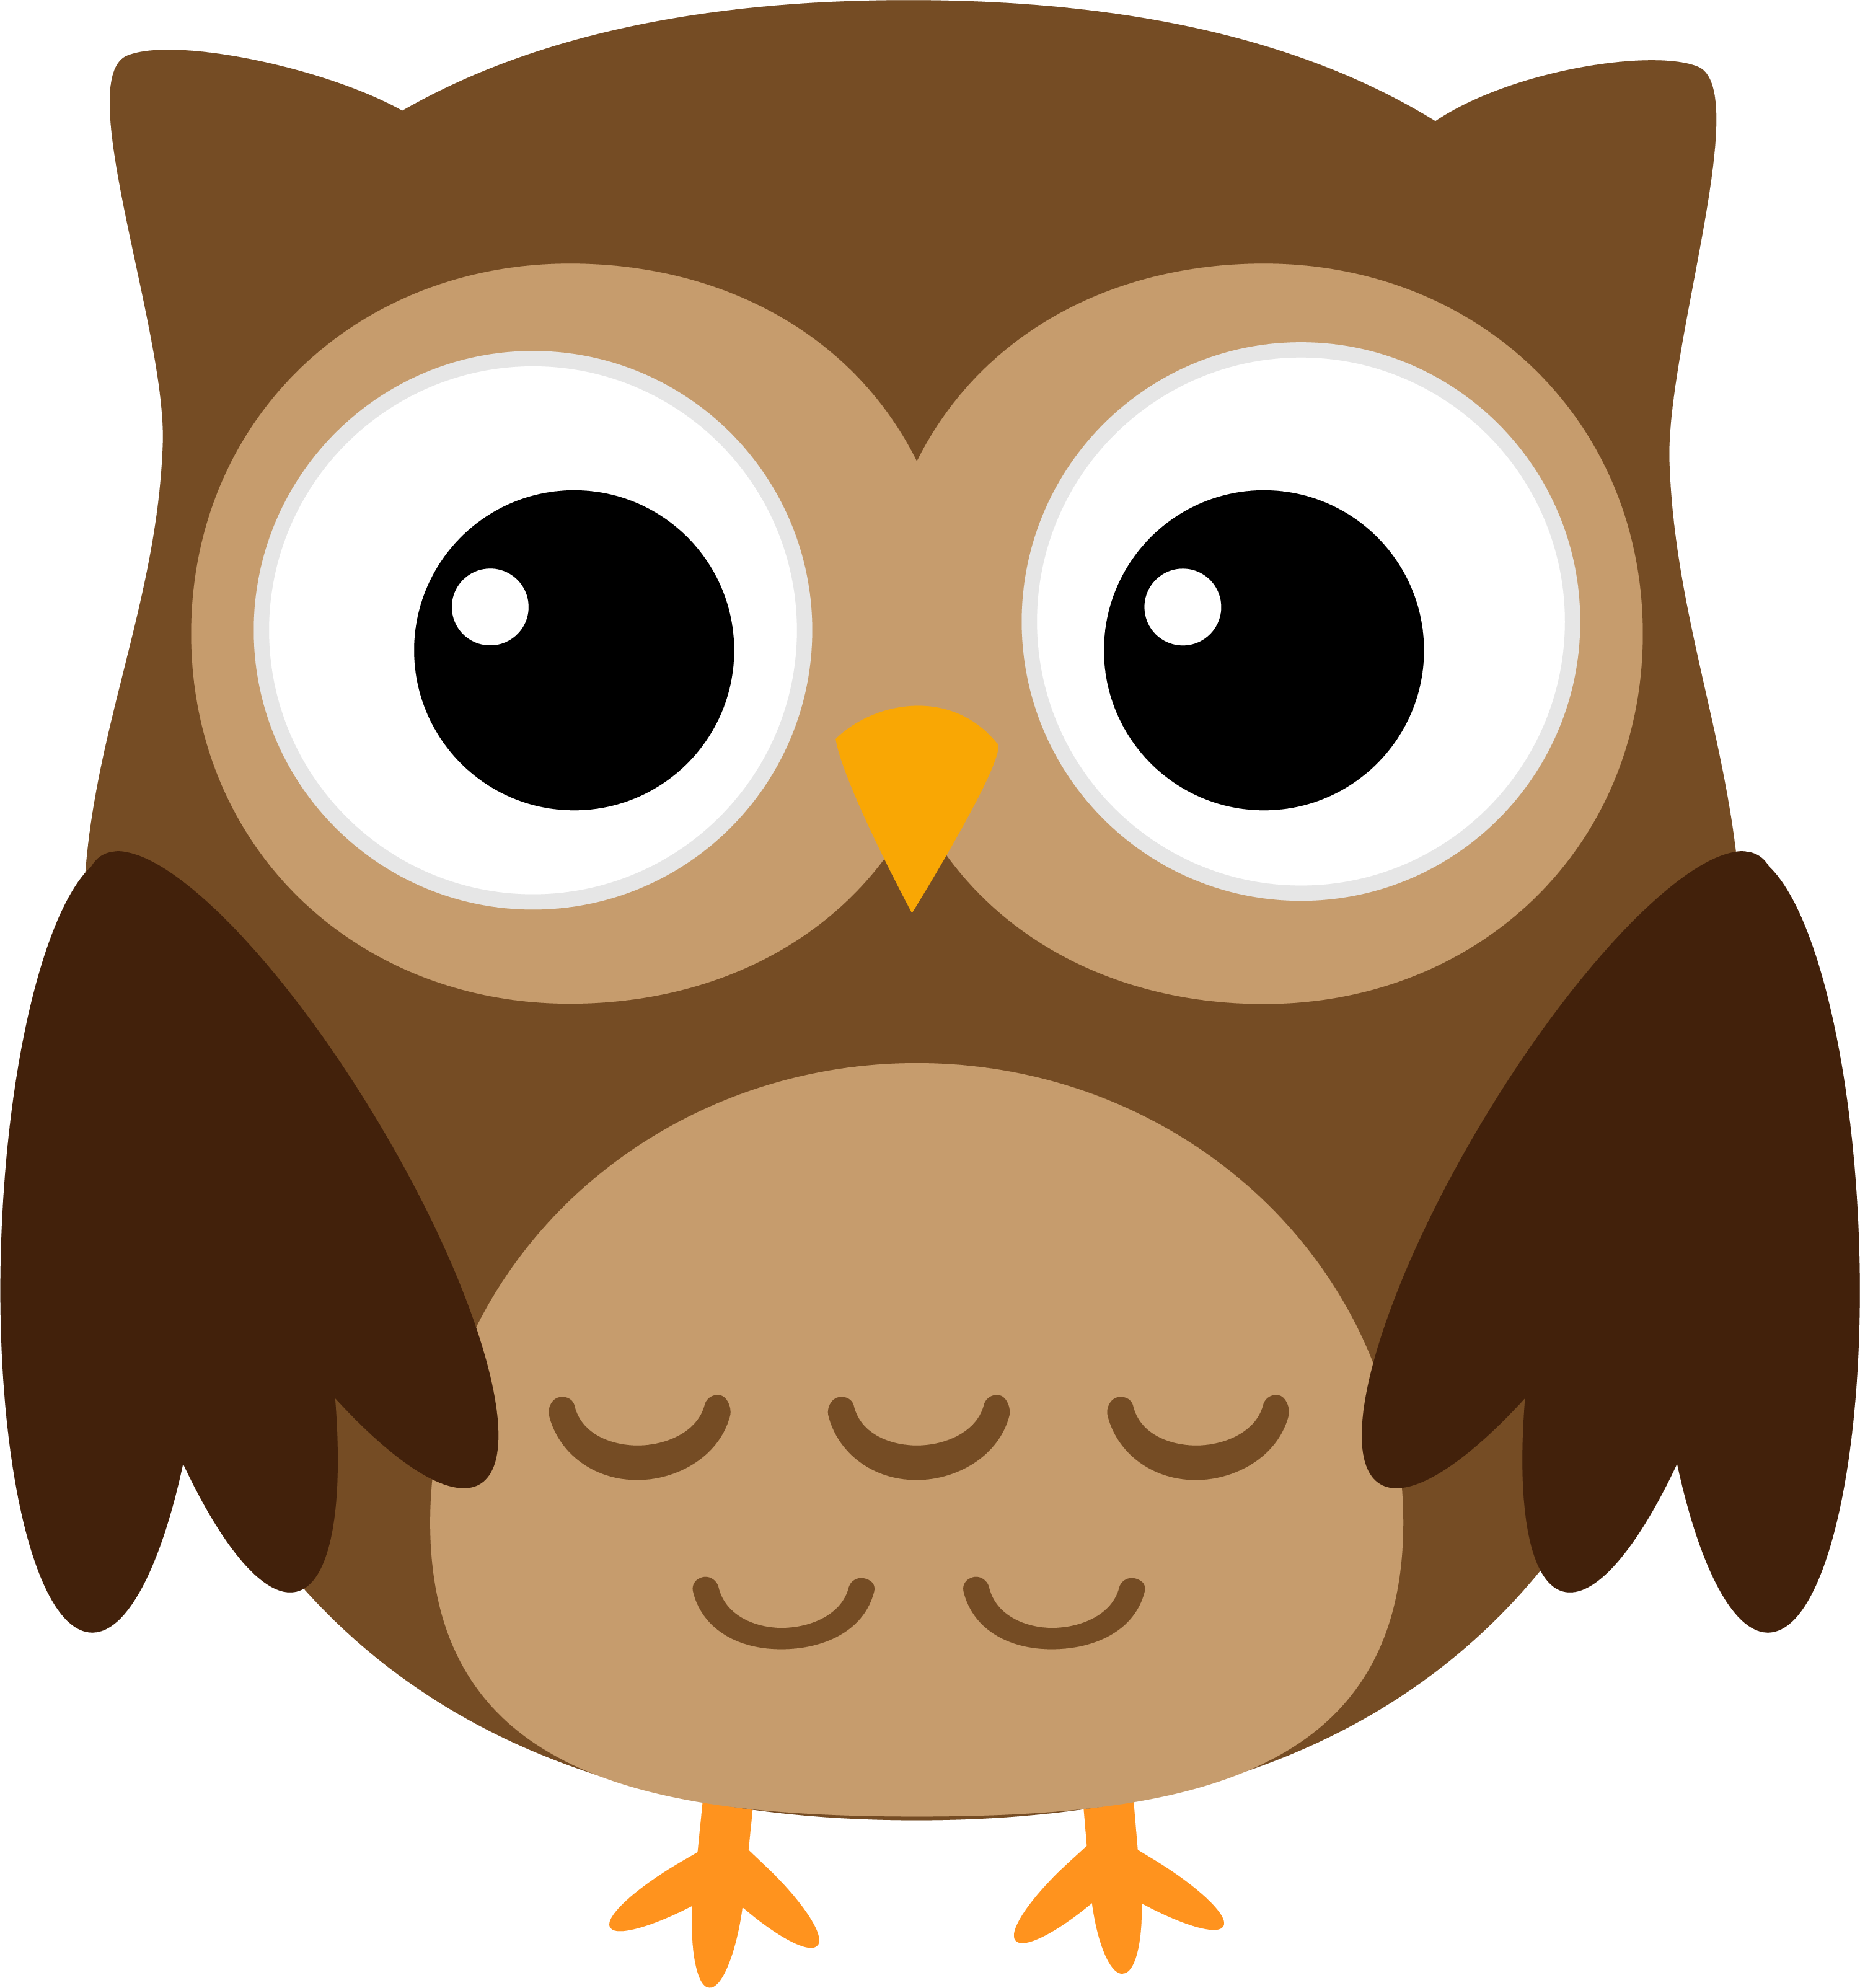 OWL Applique free embroidery design